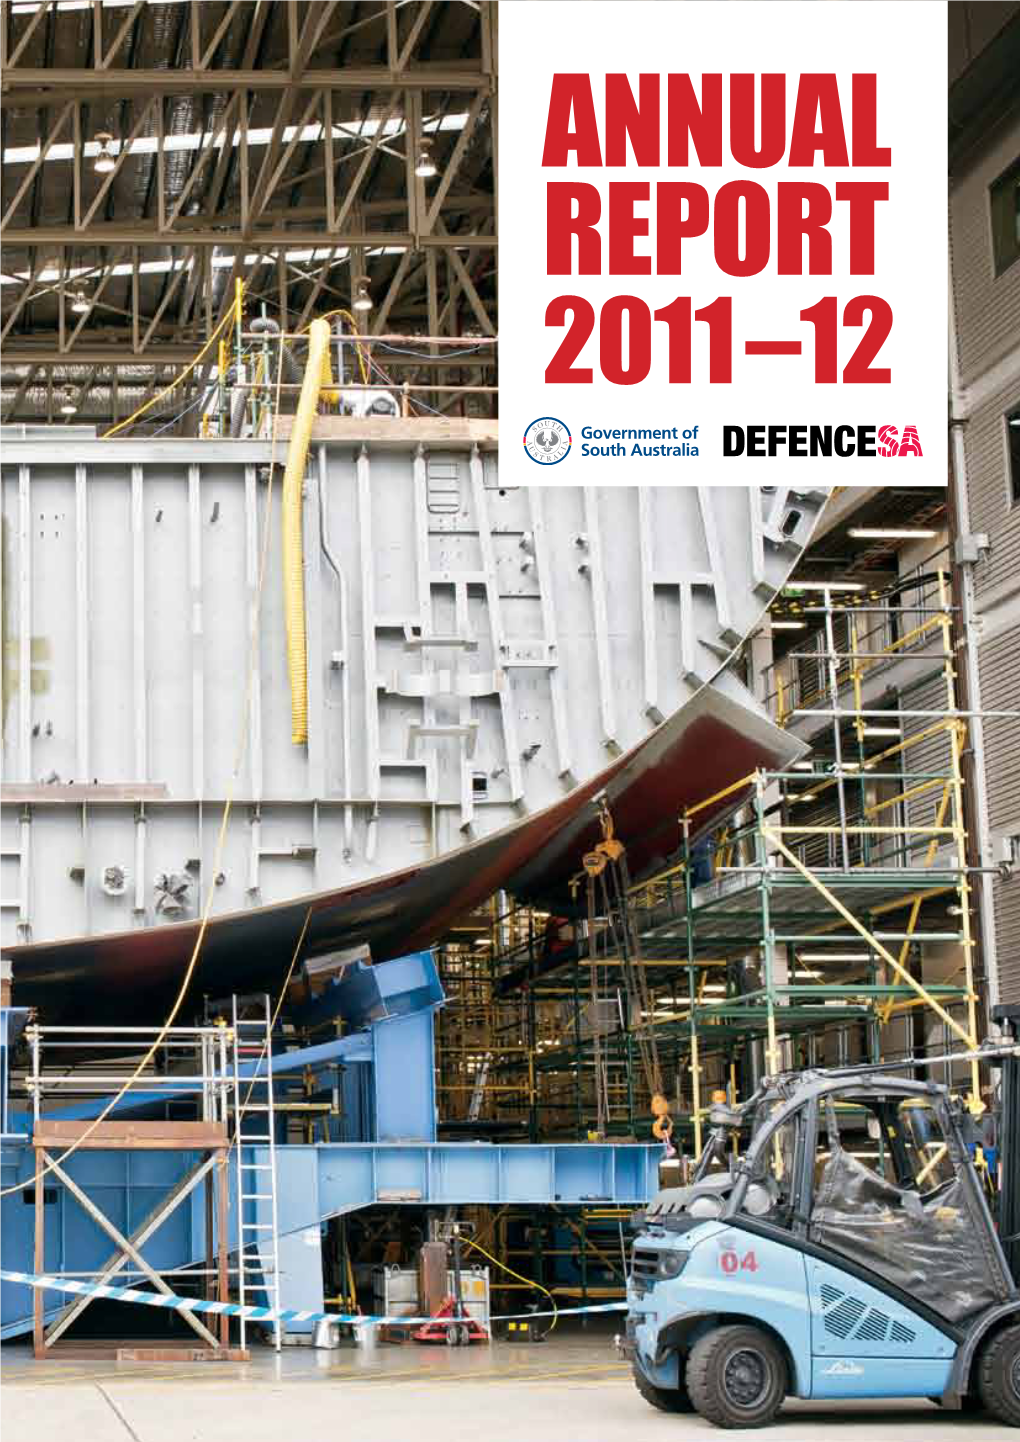 November 2012 Defence SA Annual Report 2011